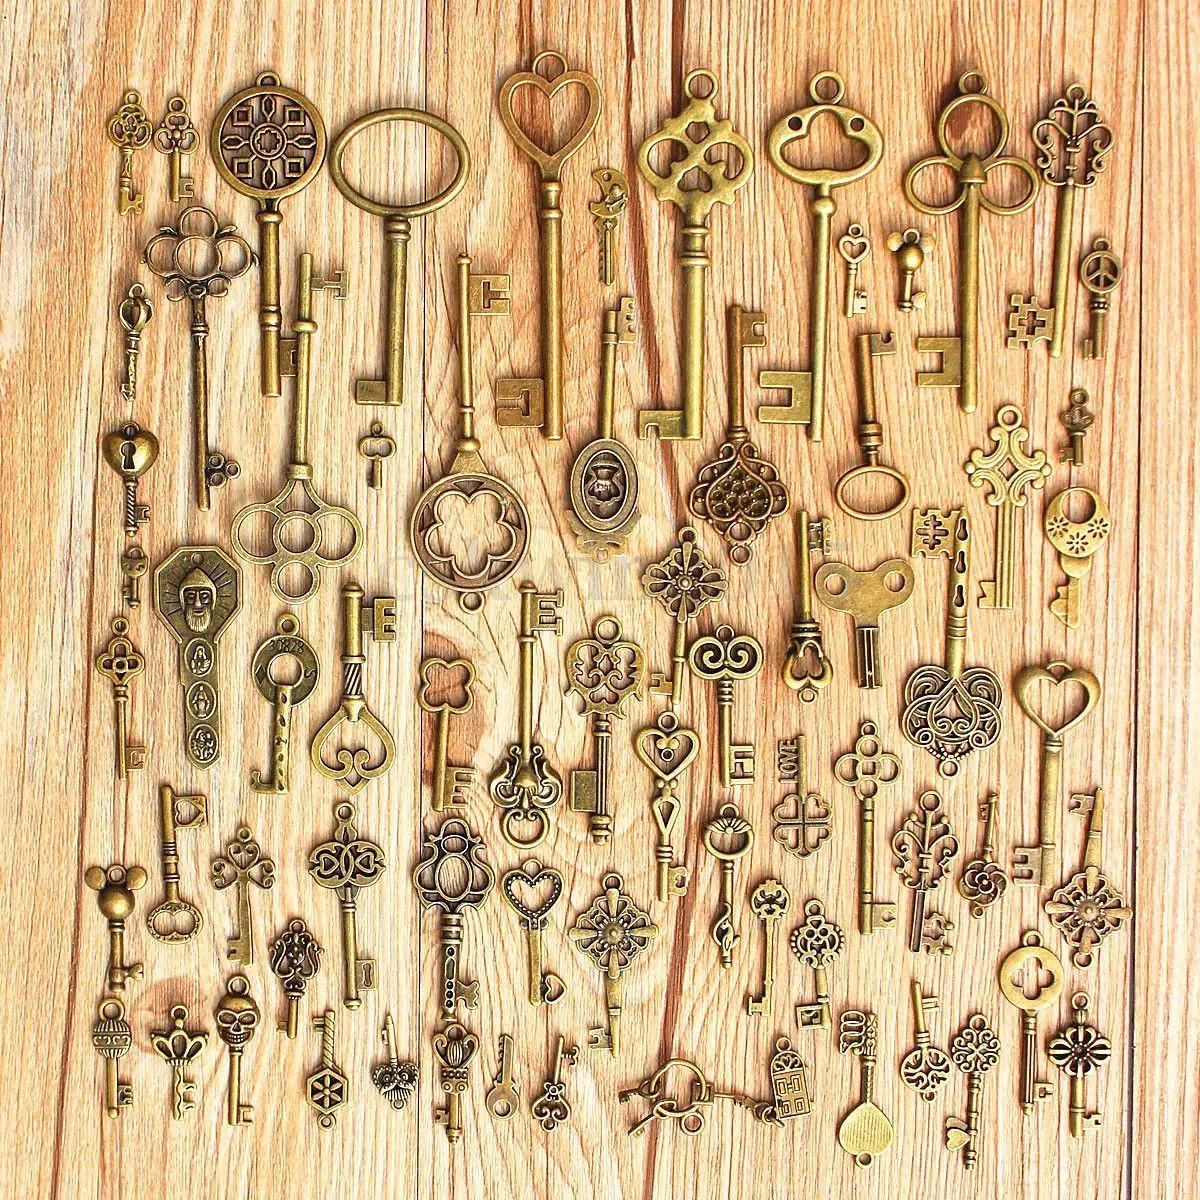 

Random 70pcs/sets Antique Vintage Old Look Bronze Skeleton Keys present gift Fancy Heart Bow for party supplies decor